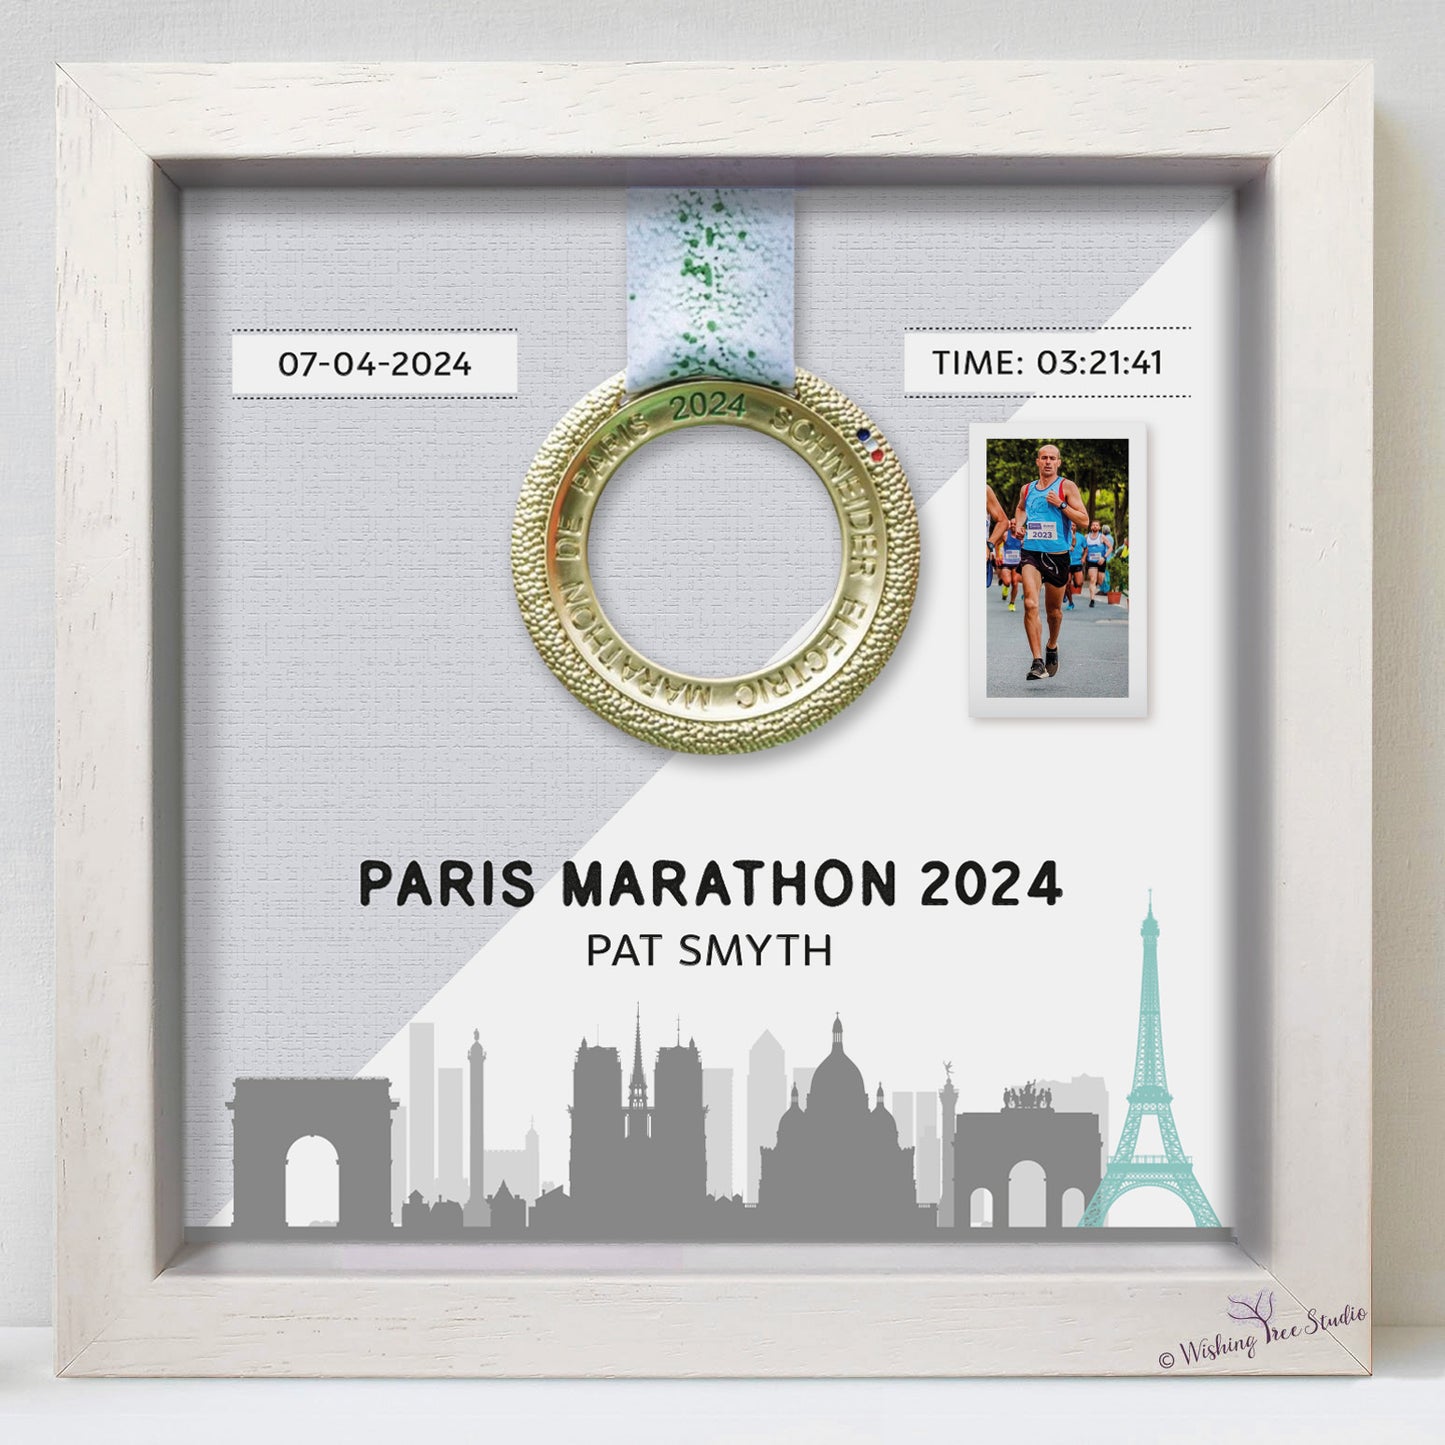 Paris marathon medal display frame